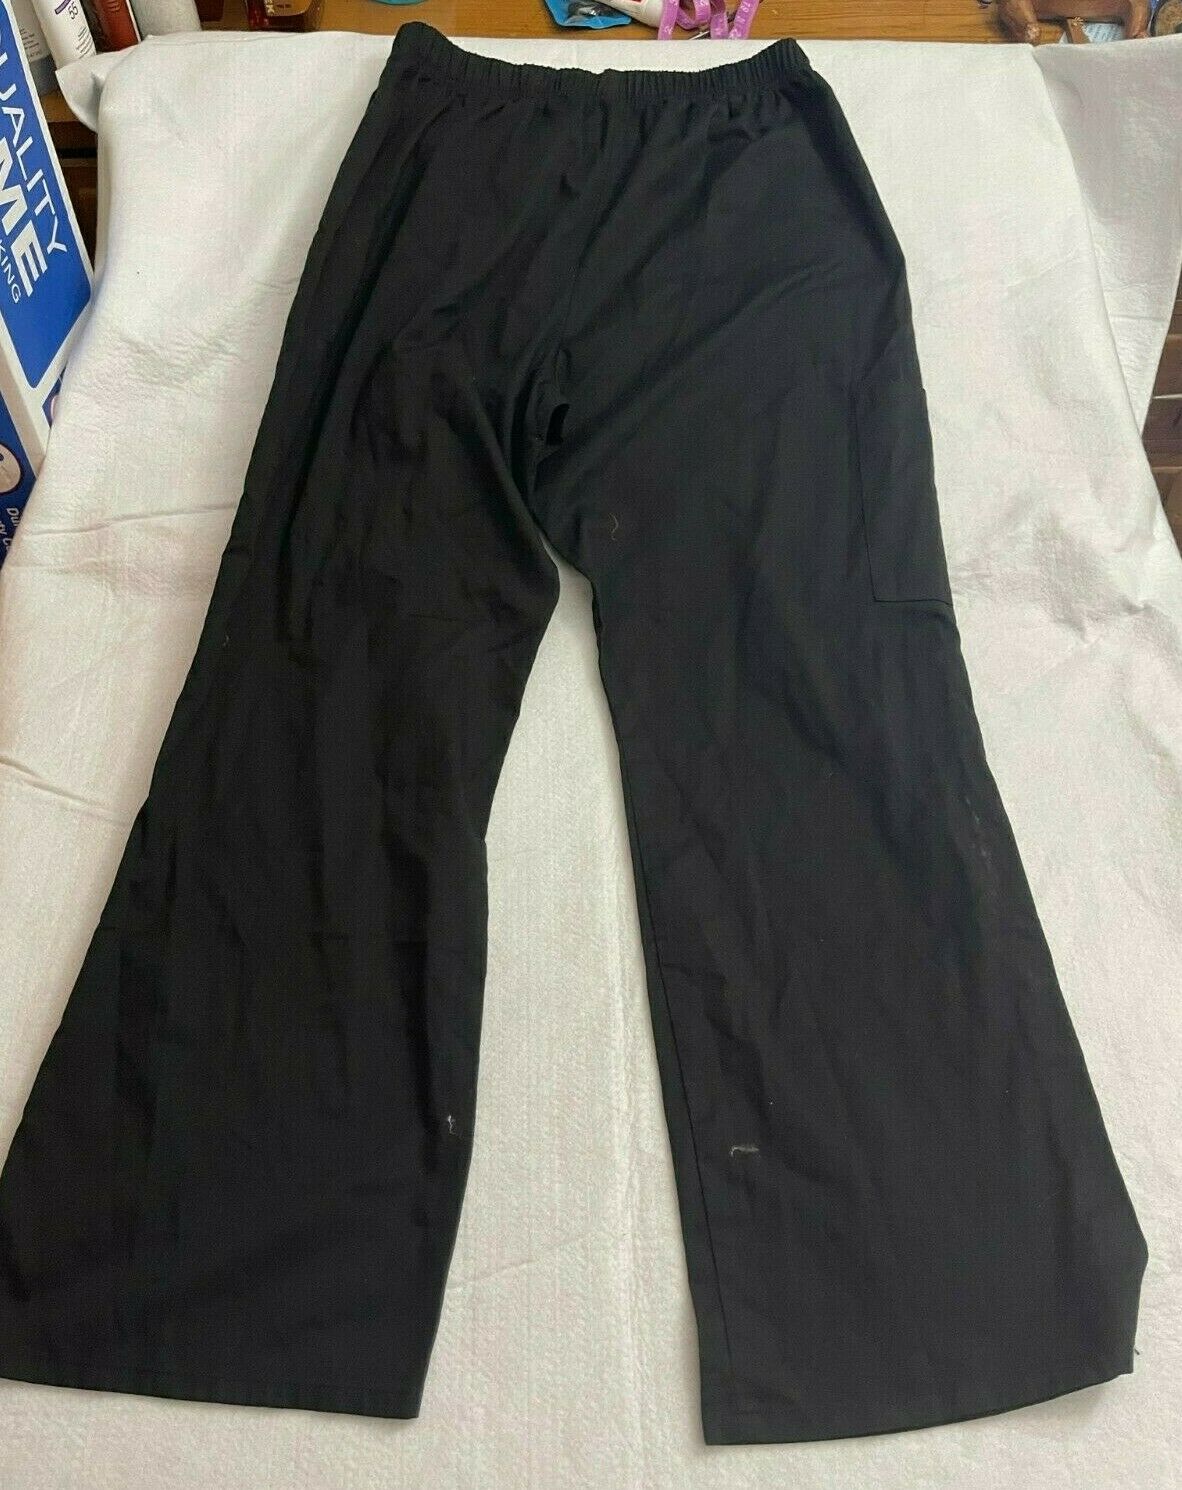 Scrub Star Black Pants Size Large